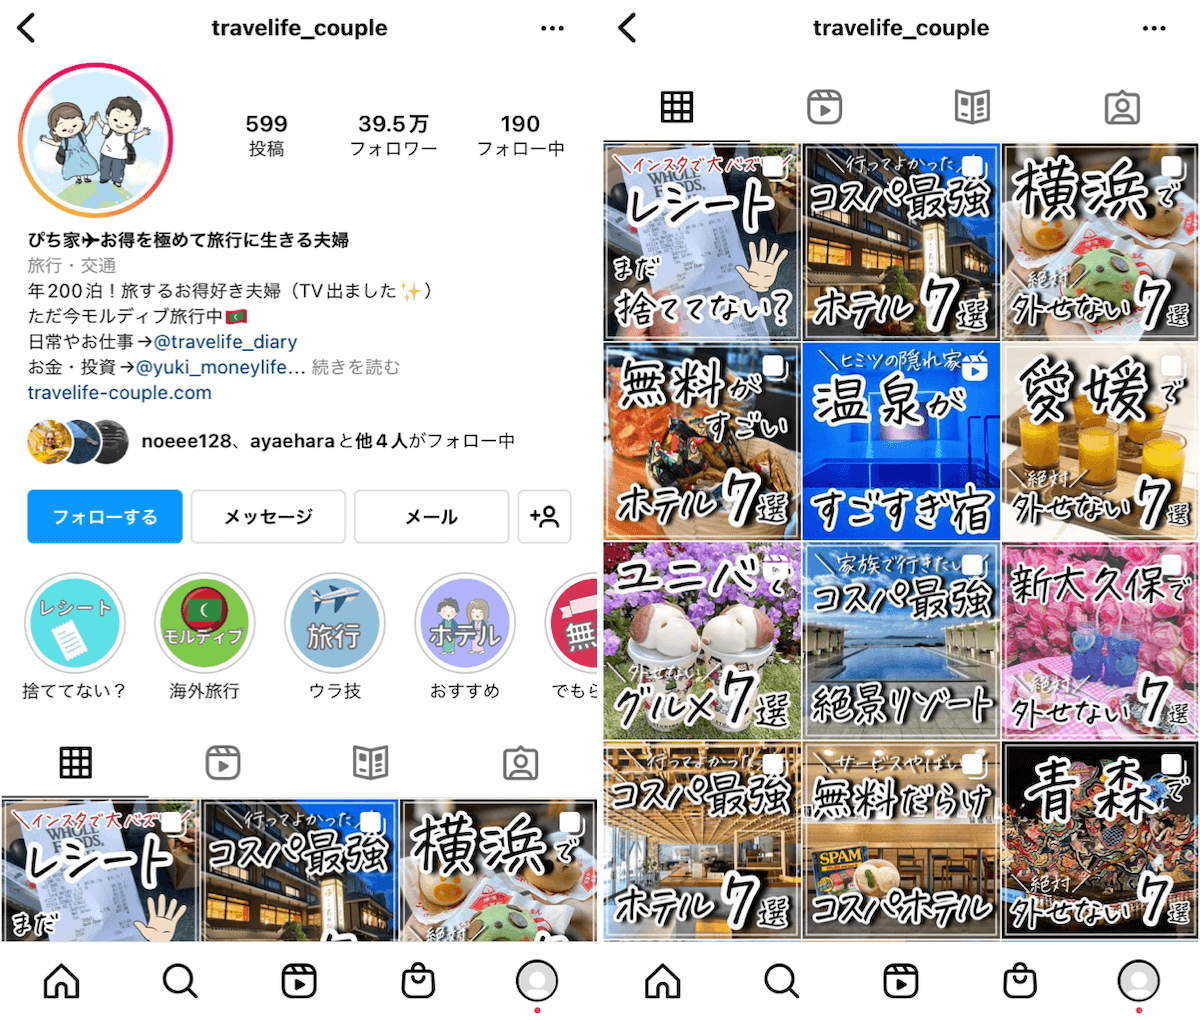 instagram-influencer-hotel-ryokan- travelife_couple